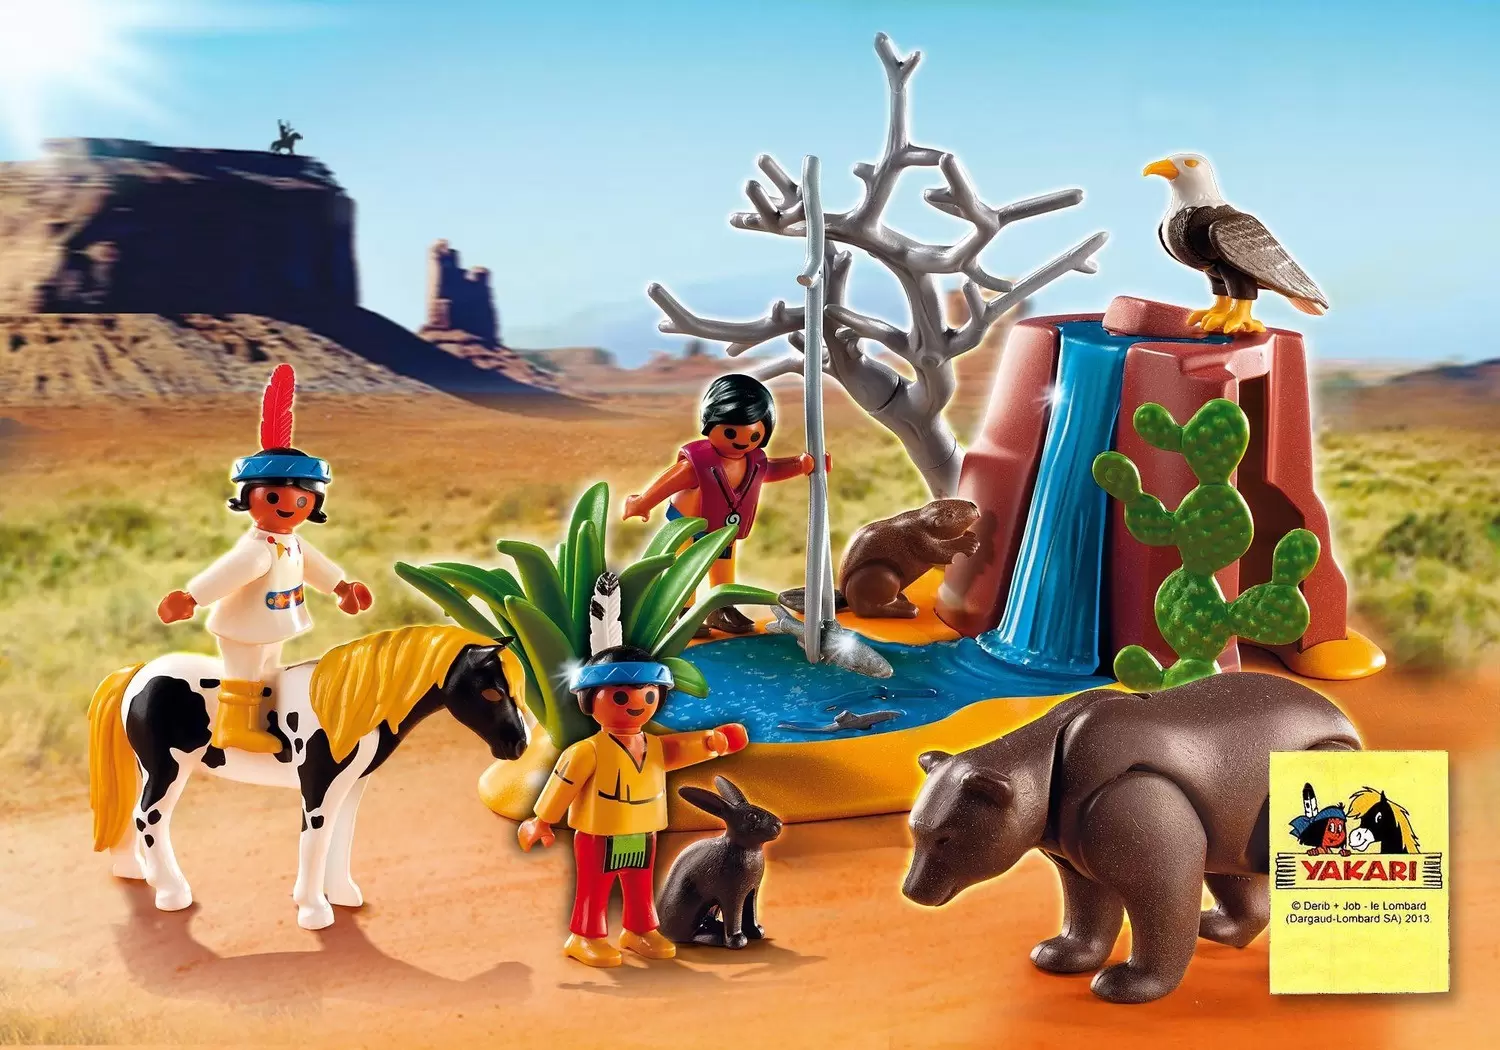 Far West Playmobil - Native American Children with Bear Cave (Yakari)